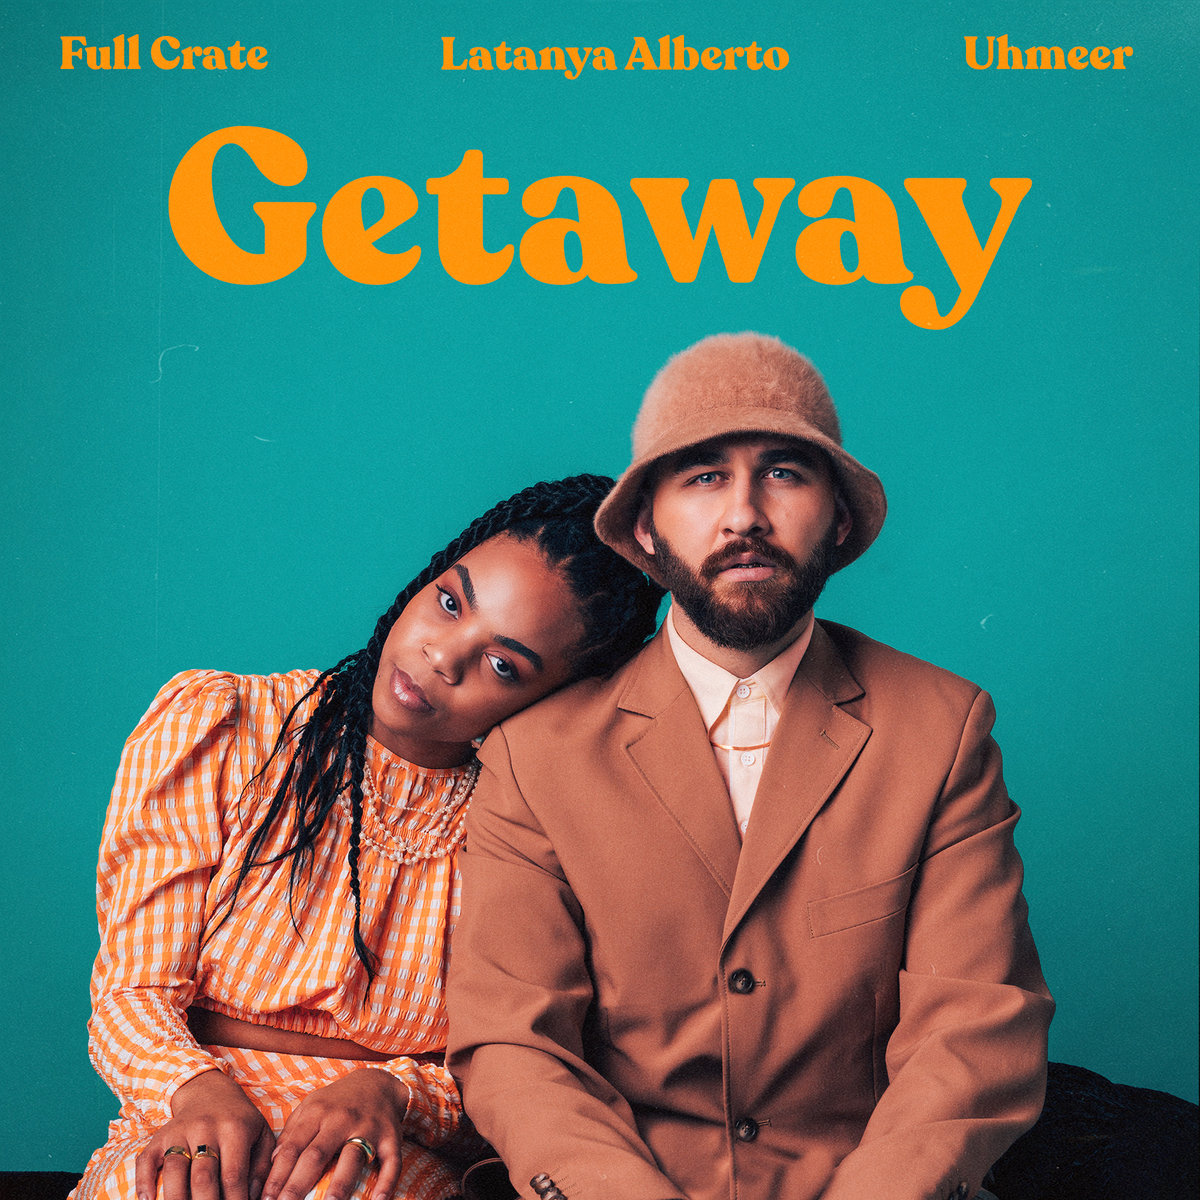 Full Crate shares new single "Getaway" feat. Latanya Alberto & Uhmeer